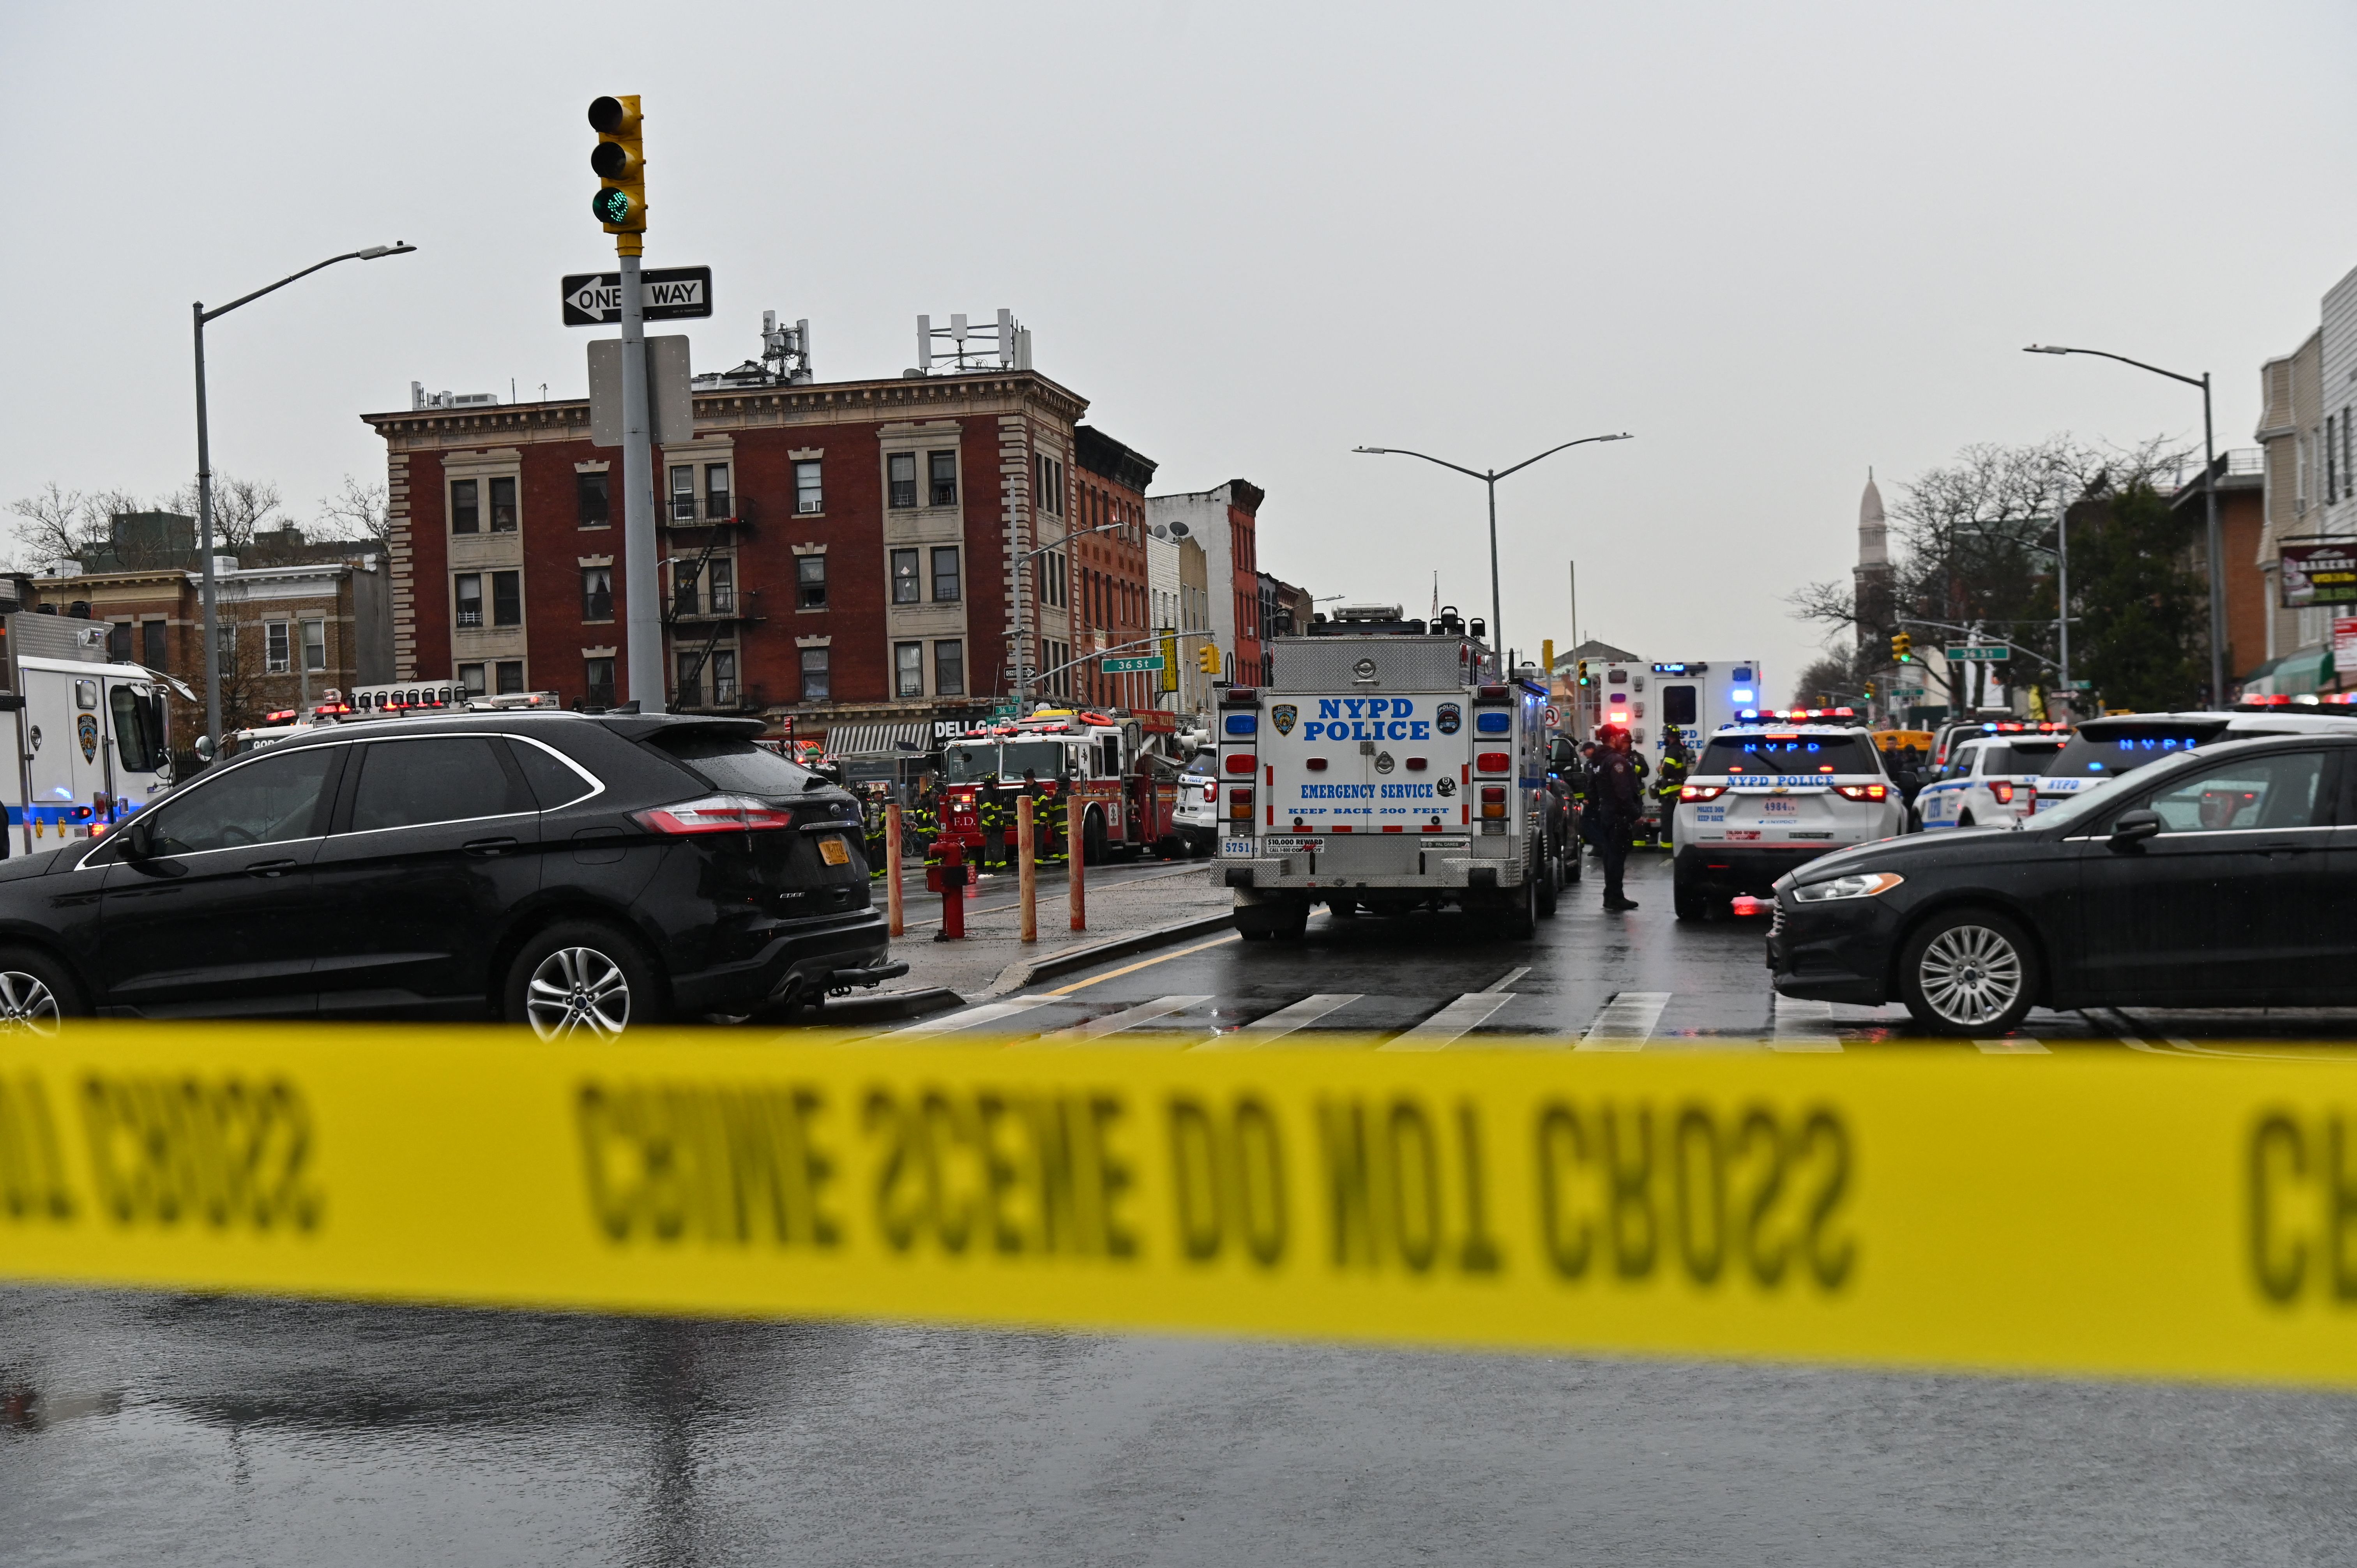 16 injured, including 8 shot, in Brooklyn subway shooting